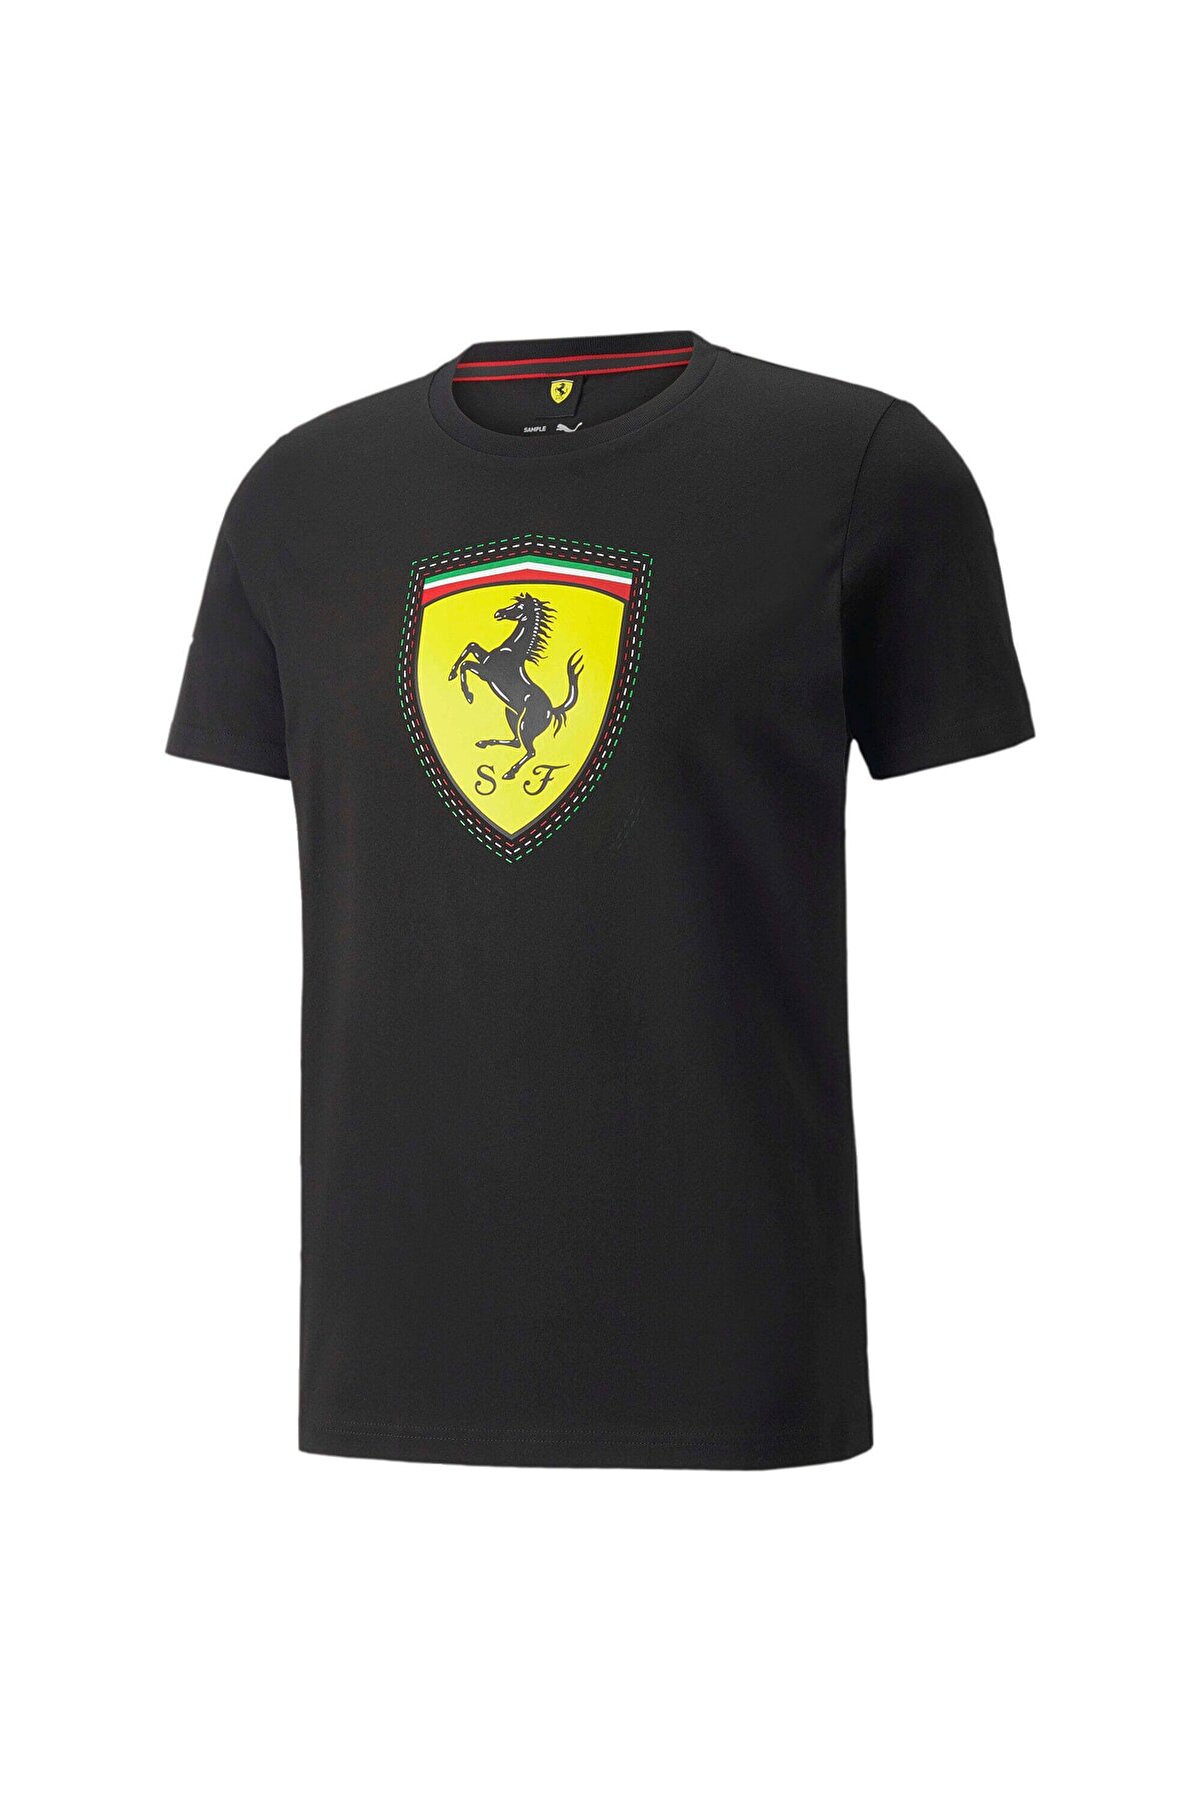 Puma Scuderıa Ferrarı Race Renkli Armalı Erkek T-shirt